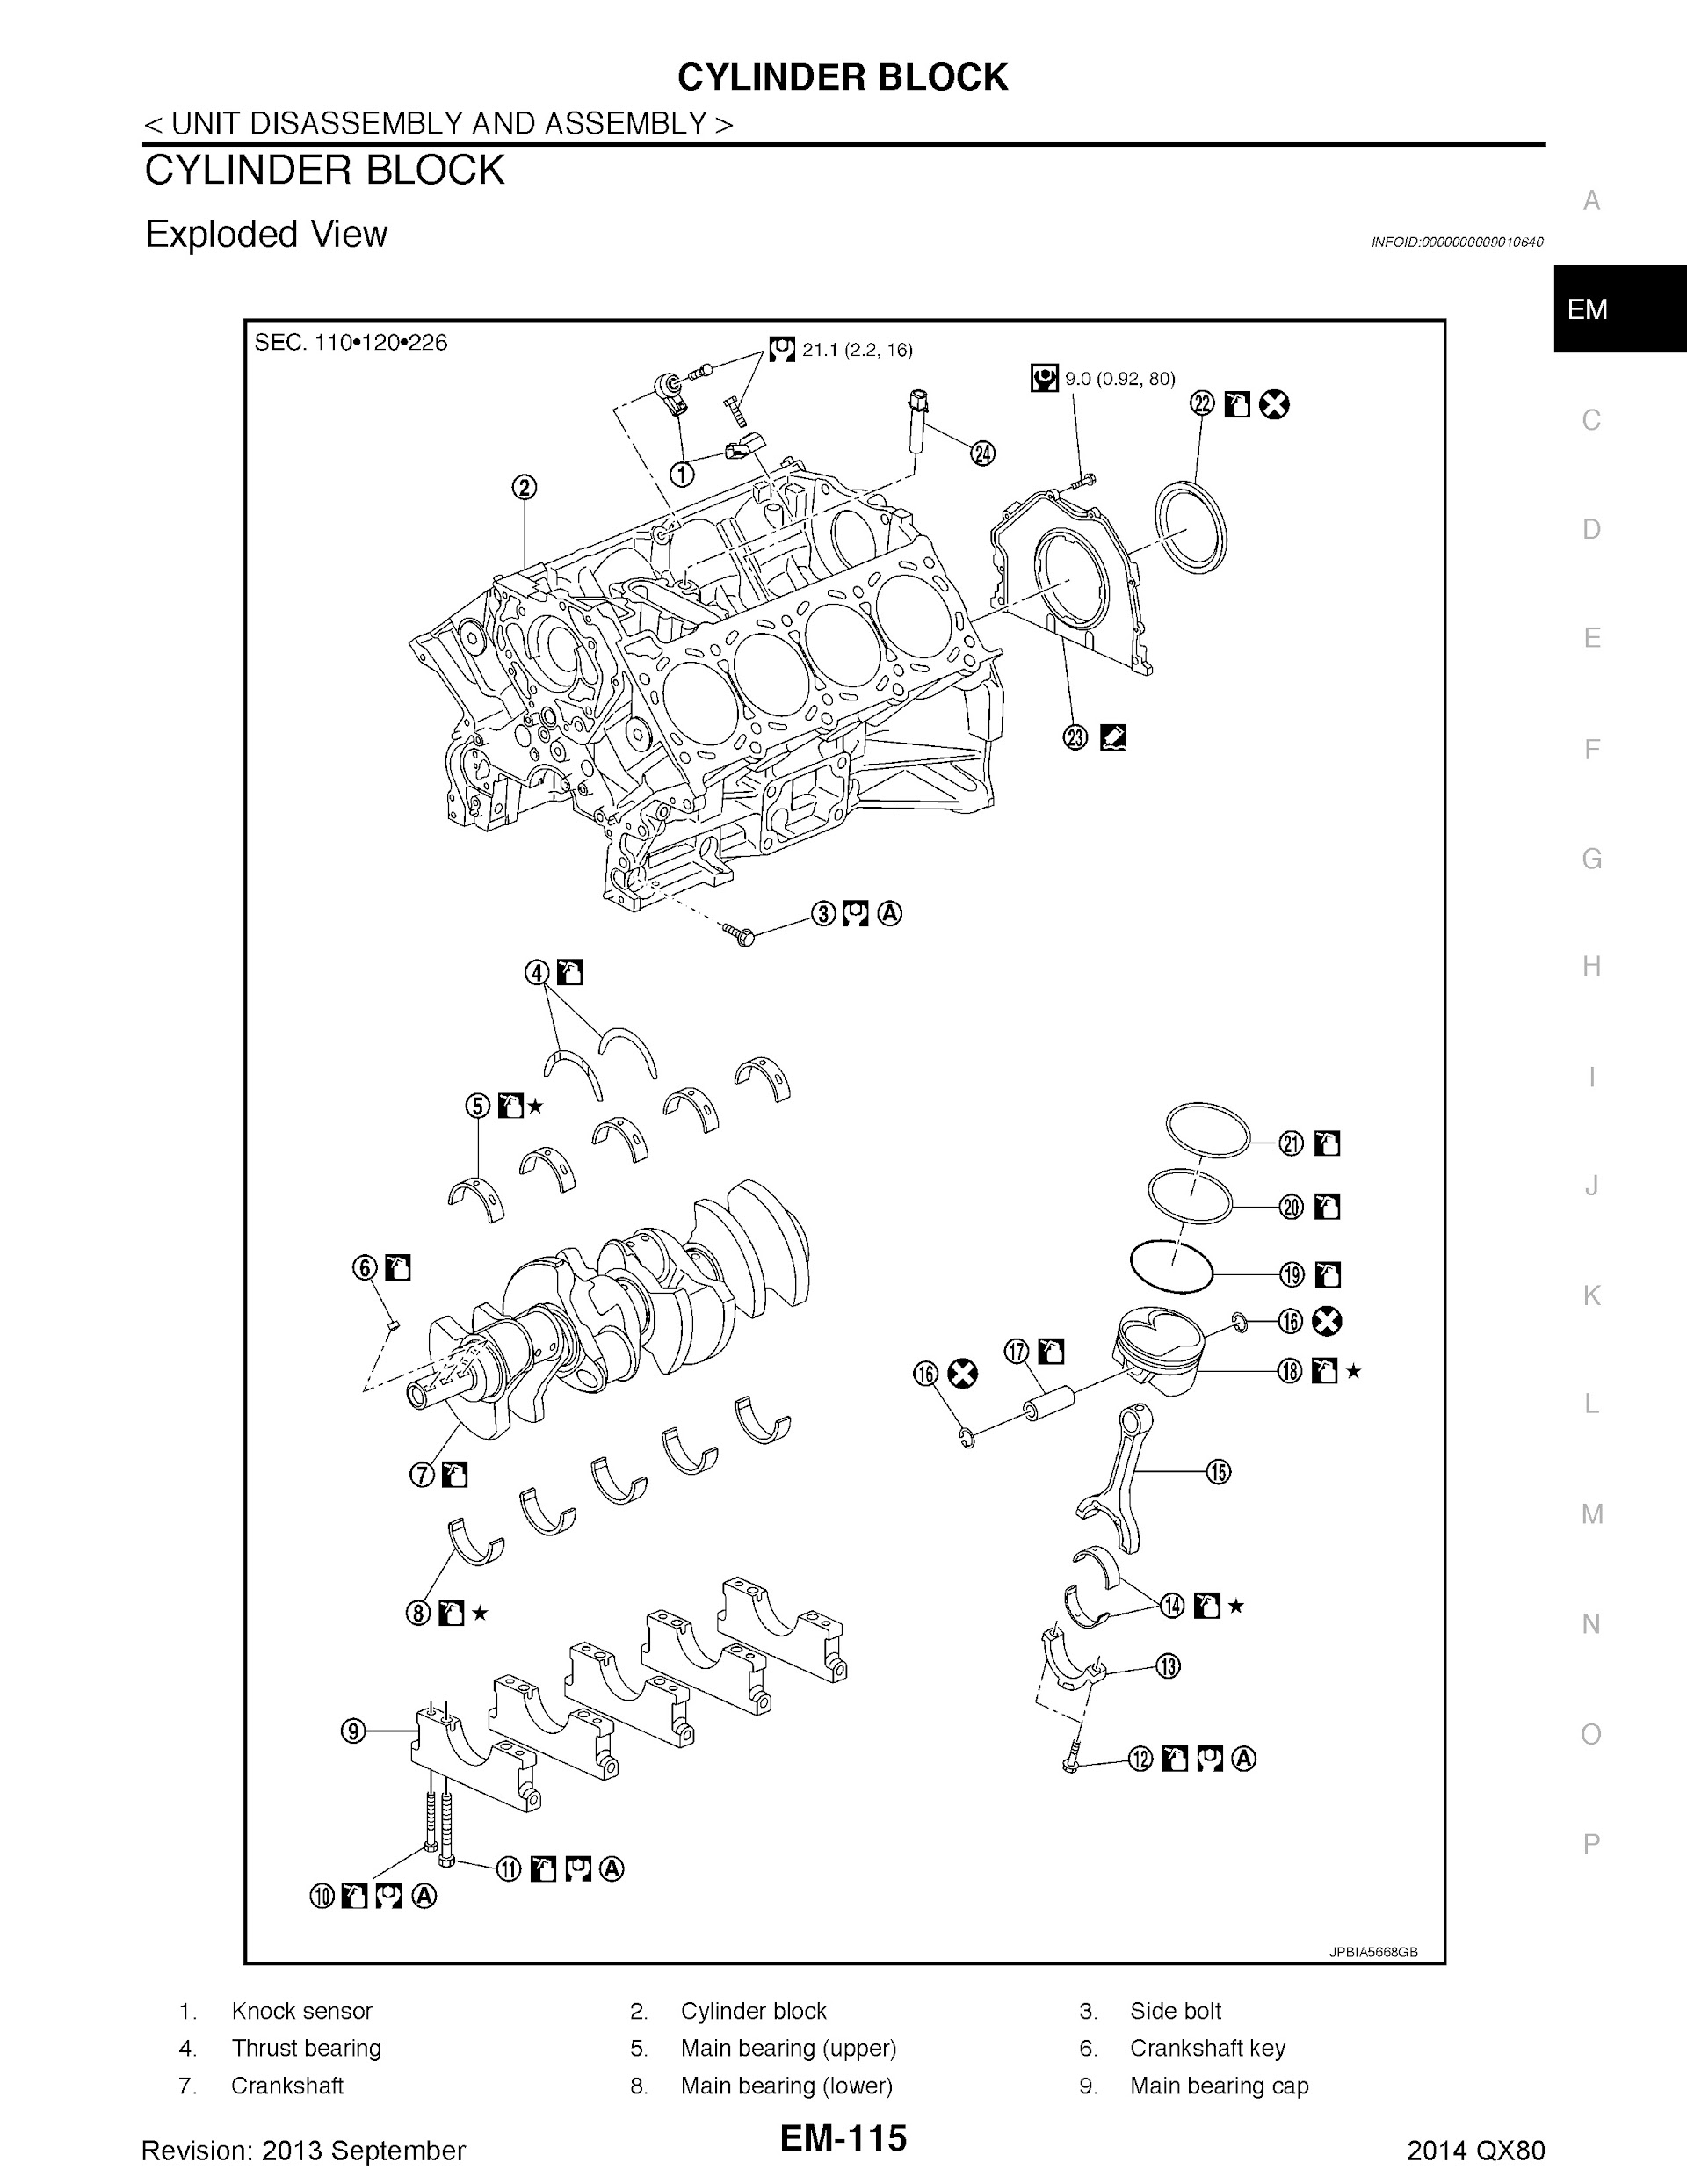 2014 Infiniti QX80 Repair Manual, Engine Unit, Cylinder Block